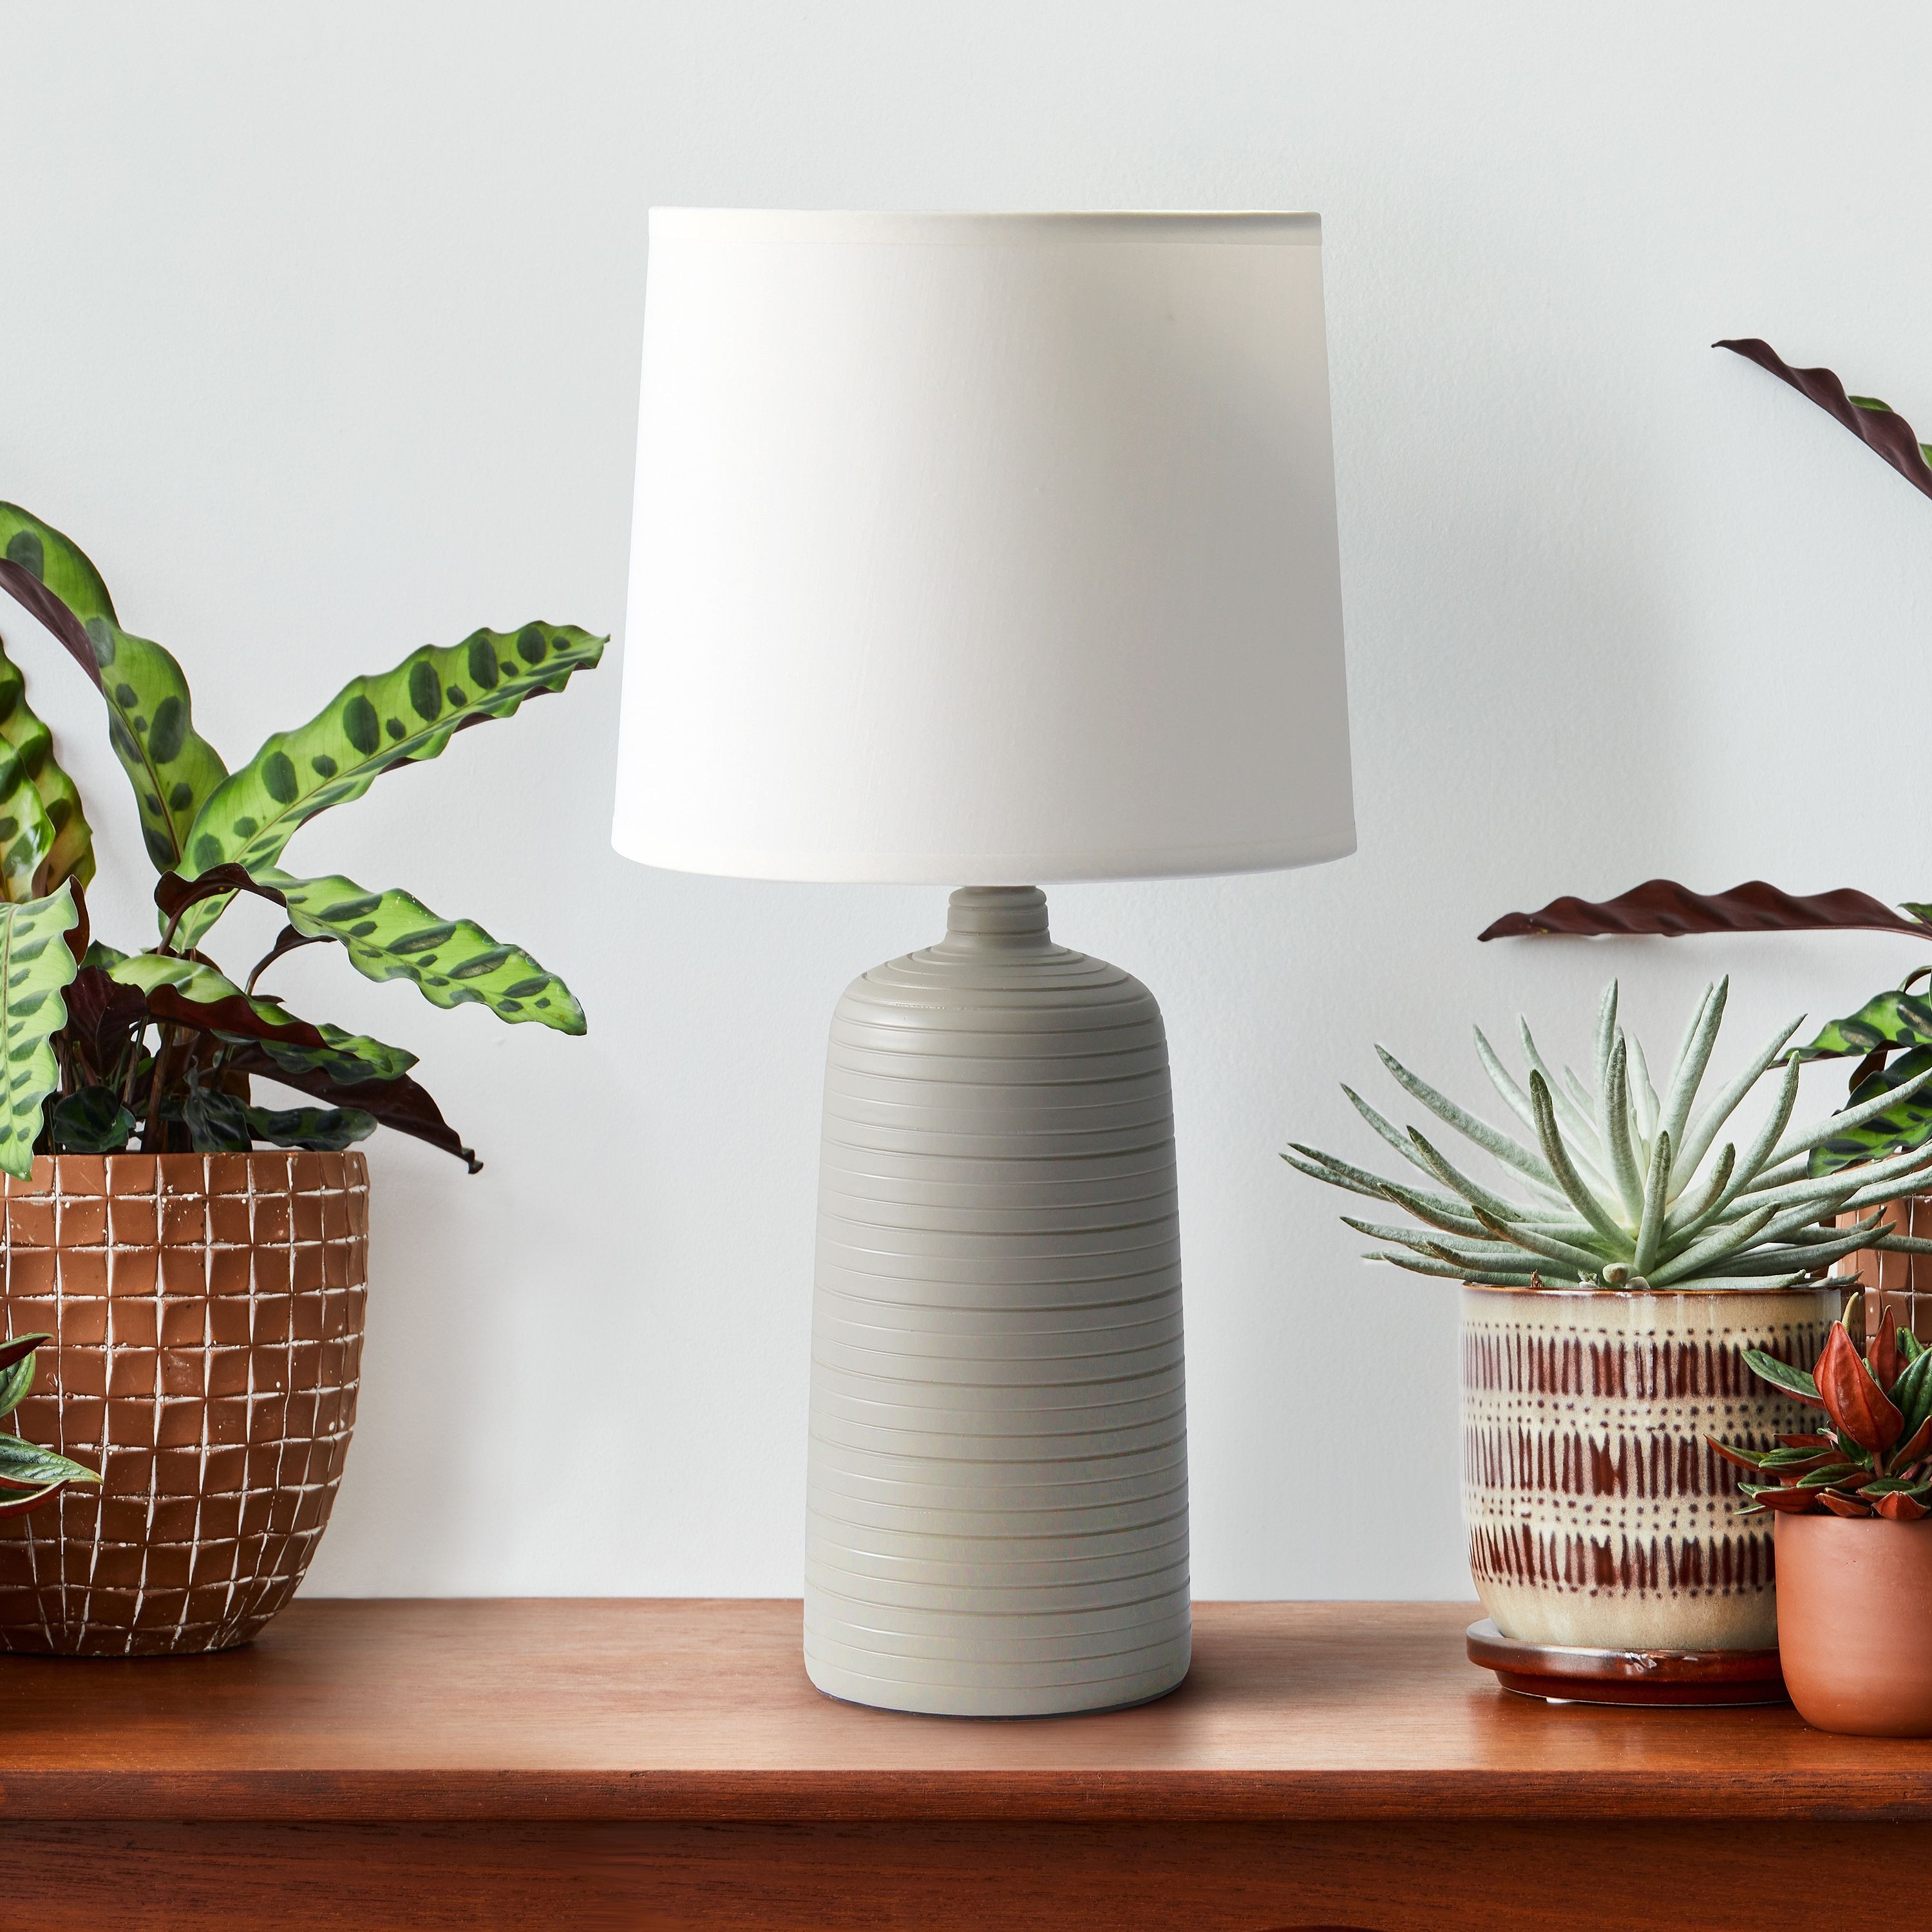 Simple Designs Textured Linear Ceramic Table Lamp ...